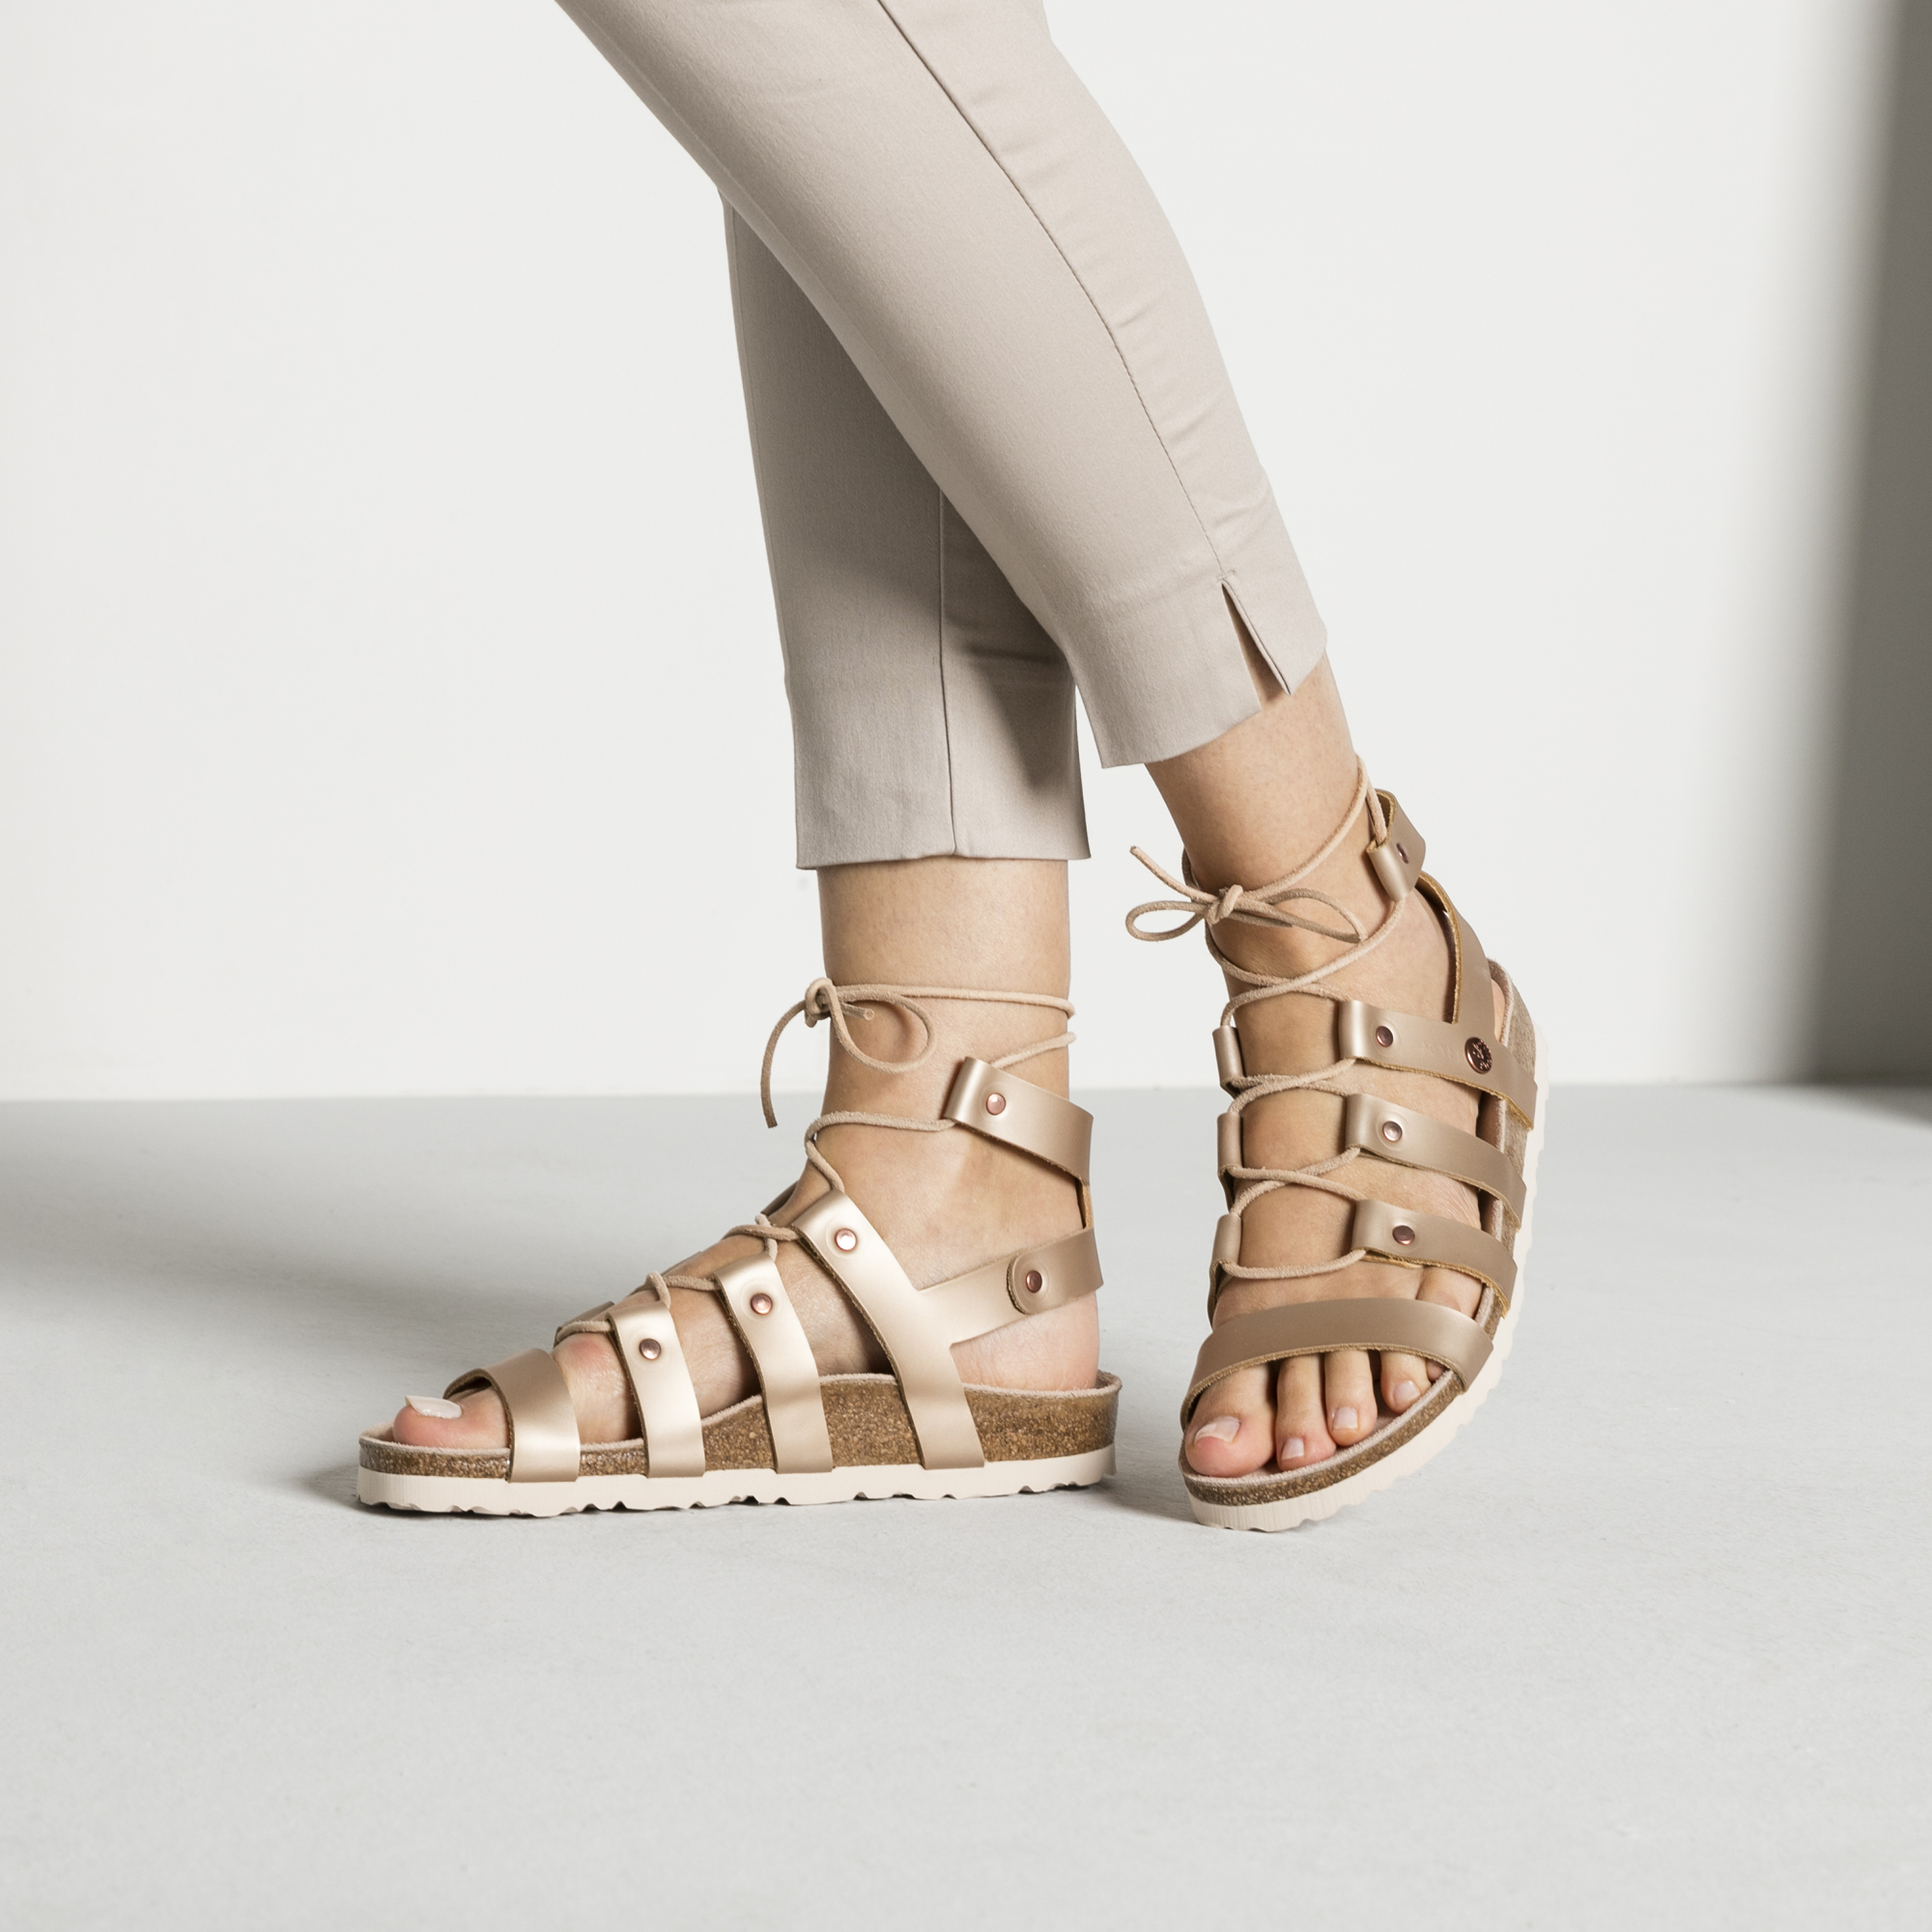 birkenstock gladiator sandals